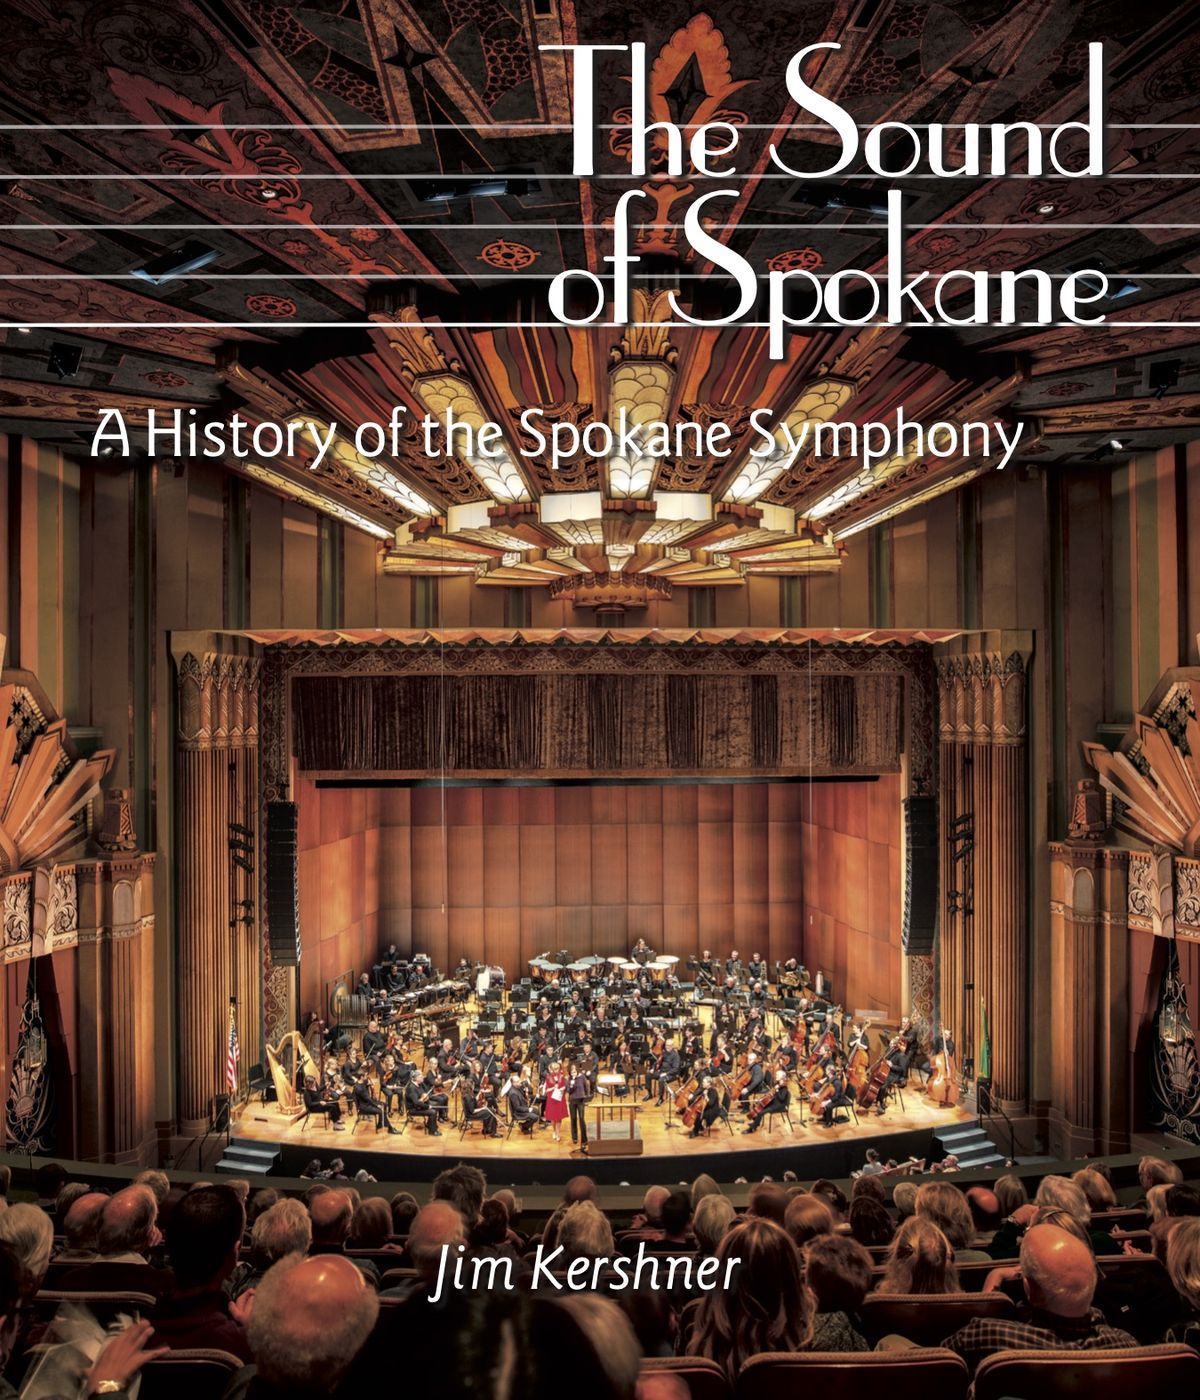 Locally Writ Jim Kershner's 'The Sound of Spokane' spotlights the